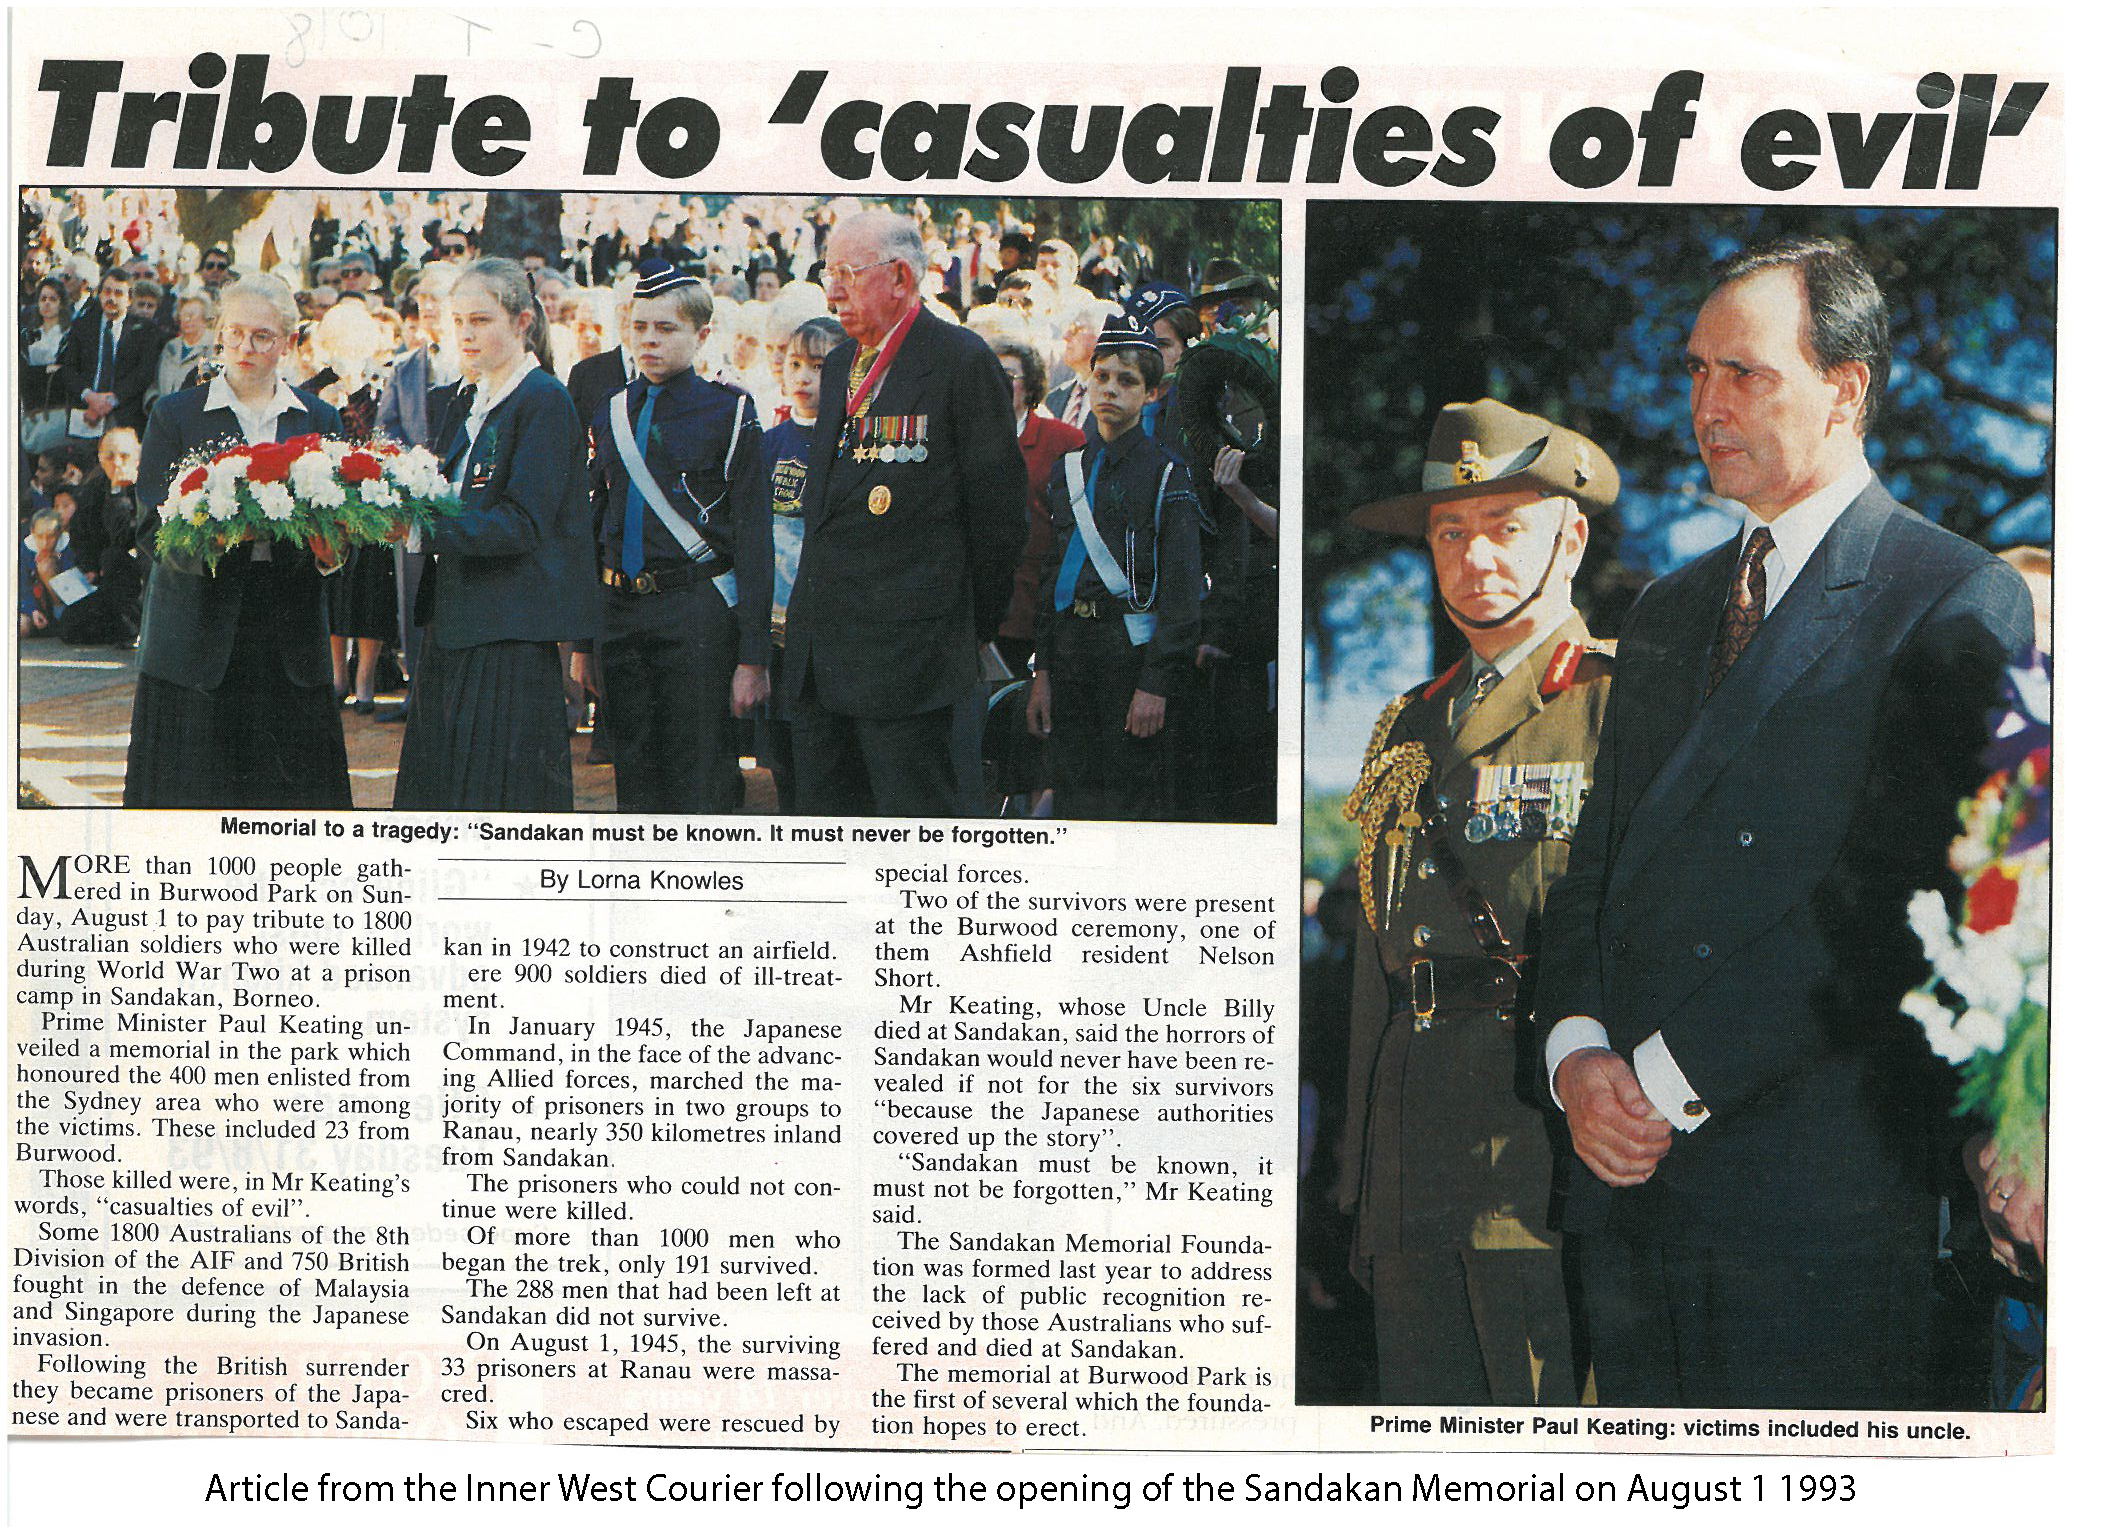 Sandakan - Inner West Courier Article from opening of memorial in 1993 